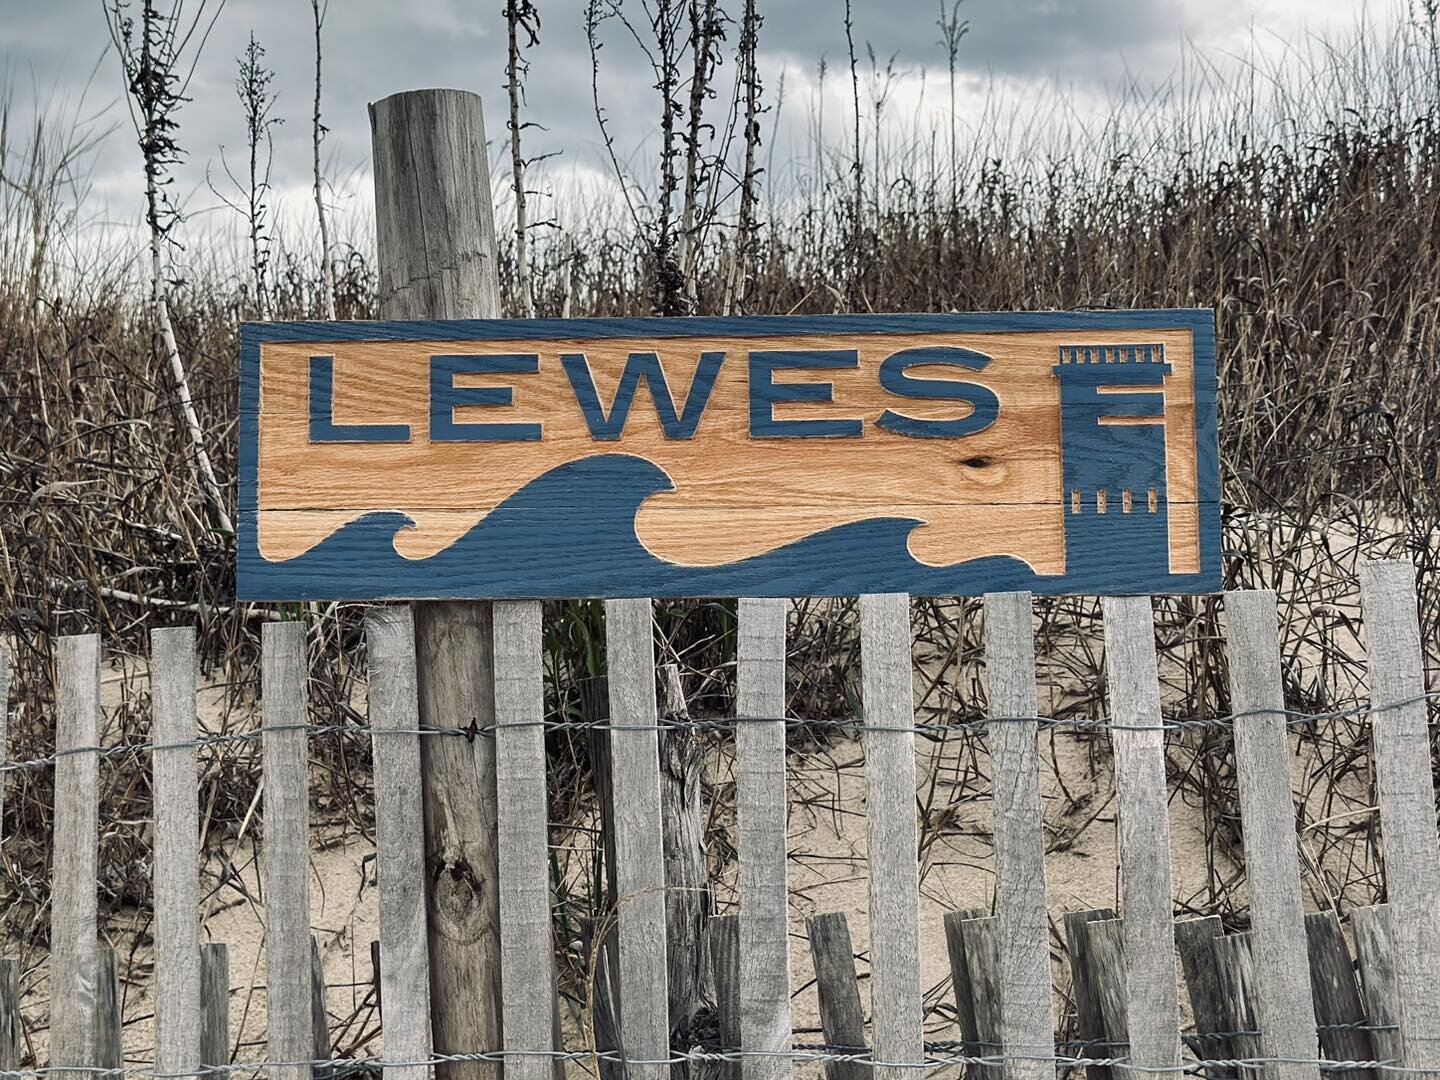 Love love love 🏖️🌊☀️ Some new beachy signs! 
Bring on the sunshine!

#lewesdelaware #lewesbeach #beachy #beachhouse #beachvibes #beachylife #bohostyle #oidela #madeindelaware